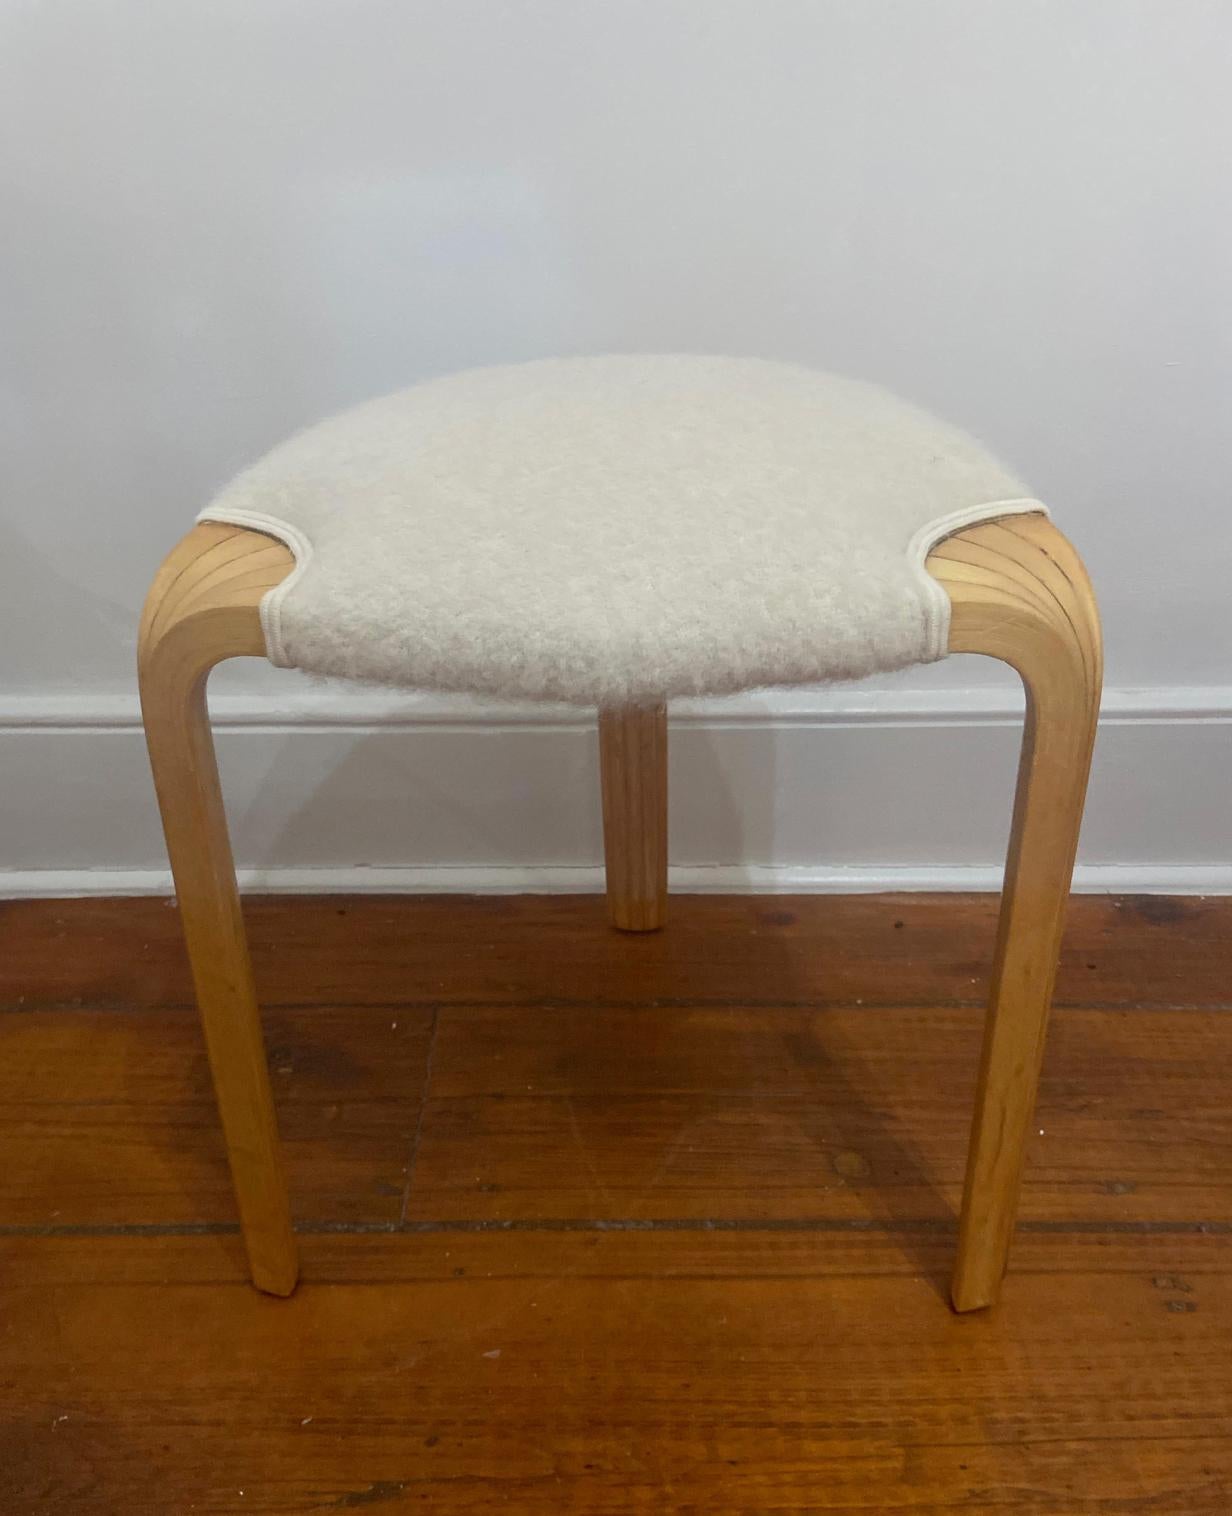 'Fan leg' stool, designed by Alvar Aalto. Manufactured by Artek, Finland, circa 1950. Reupholstered in a beautiful wool by Pierre Fre